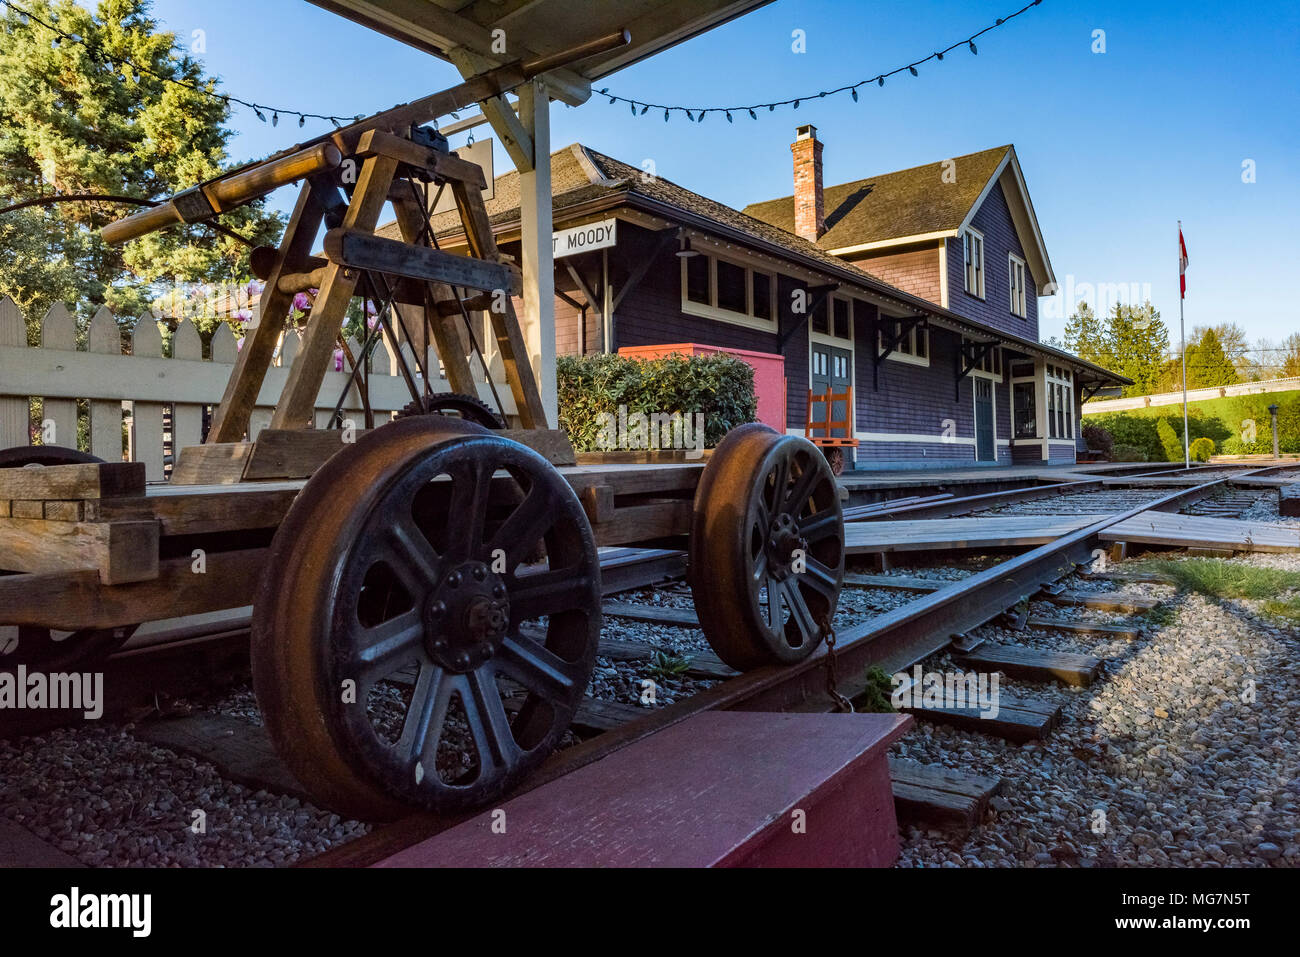 The Port Moody Station Museum, Port Moody, British Columbia, Canada. Stock Photo